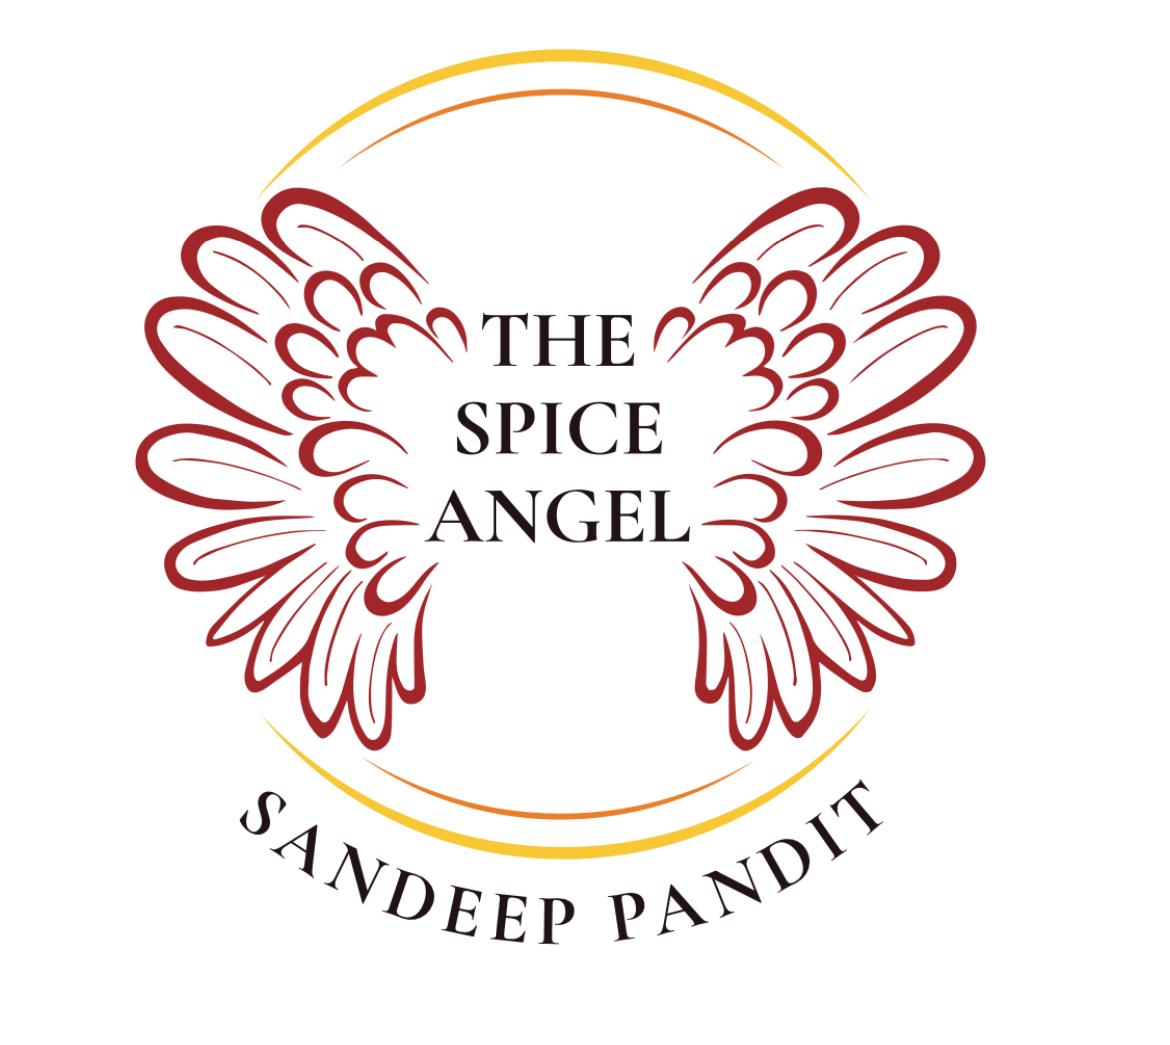 The spice angel logo